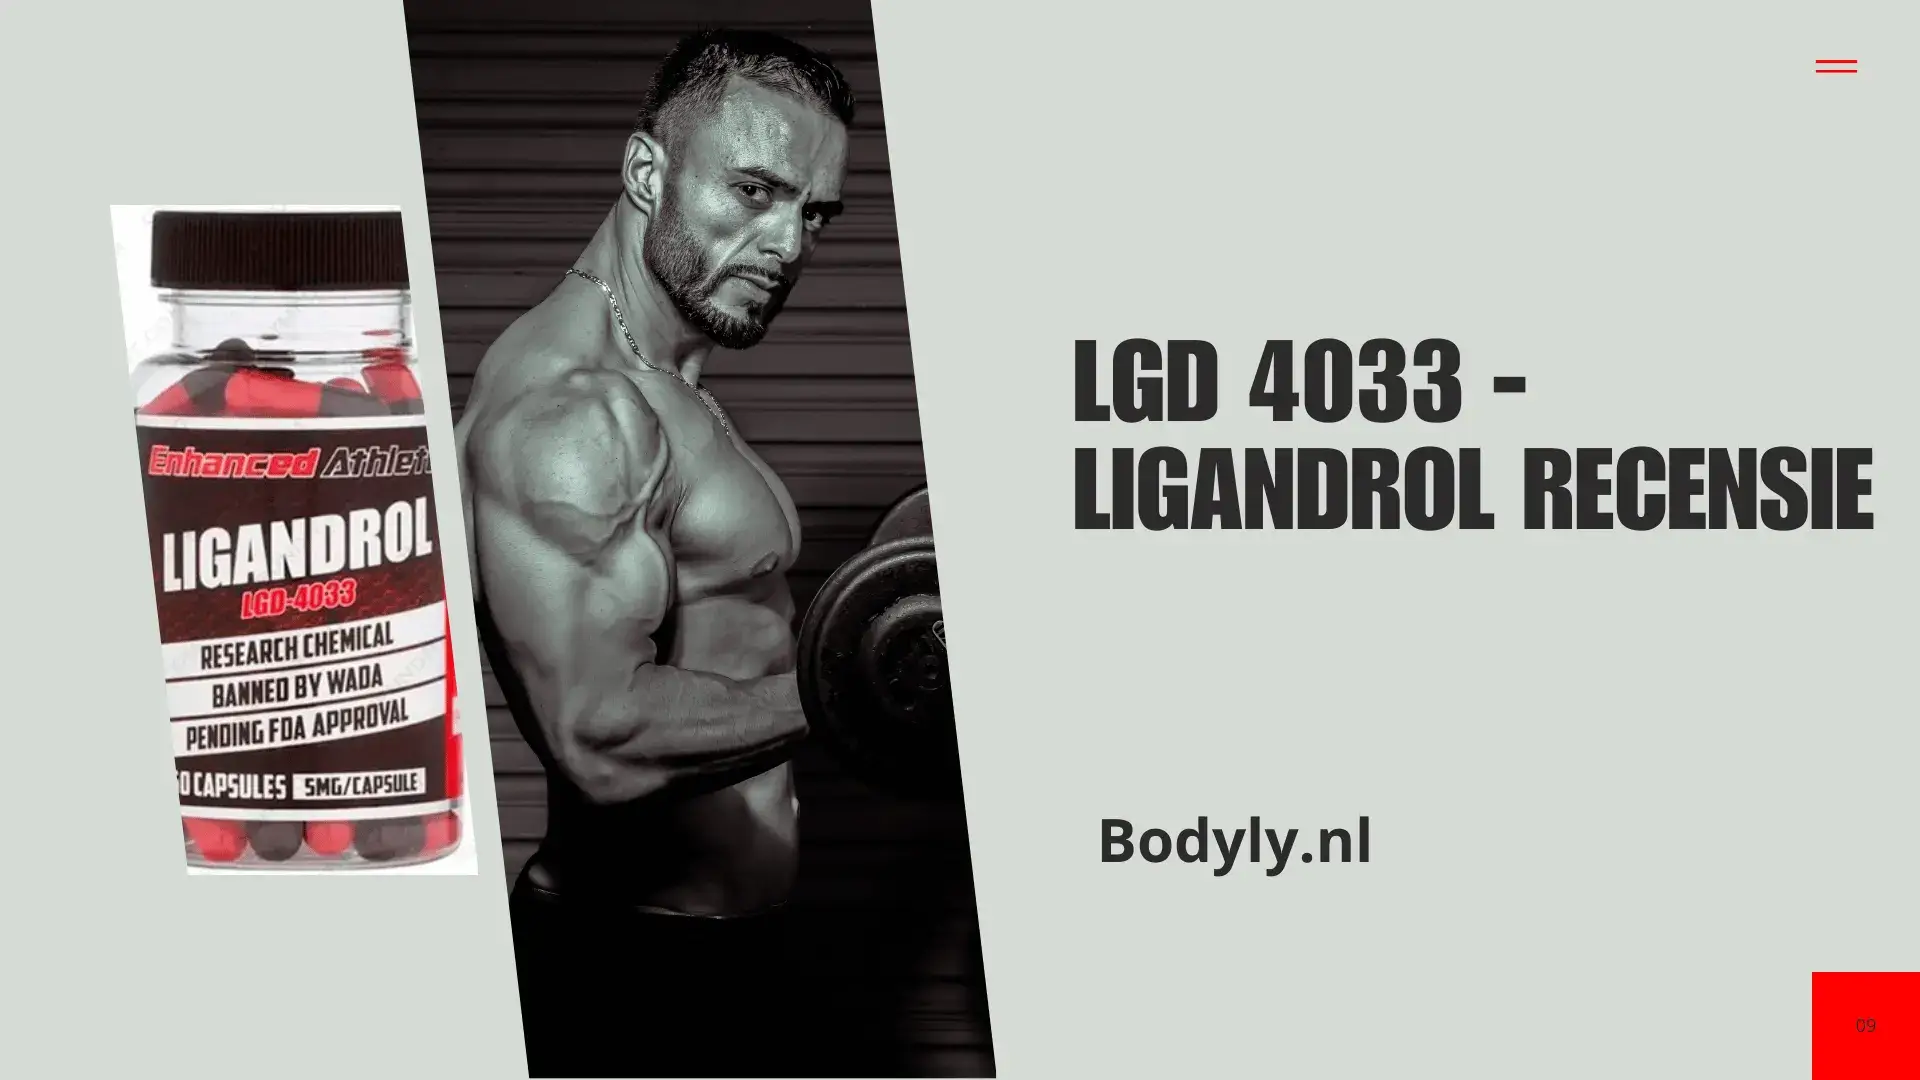 LGD 4033 - Ligandrol recensie